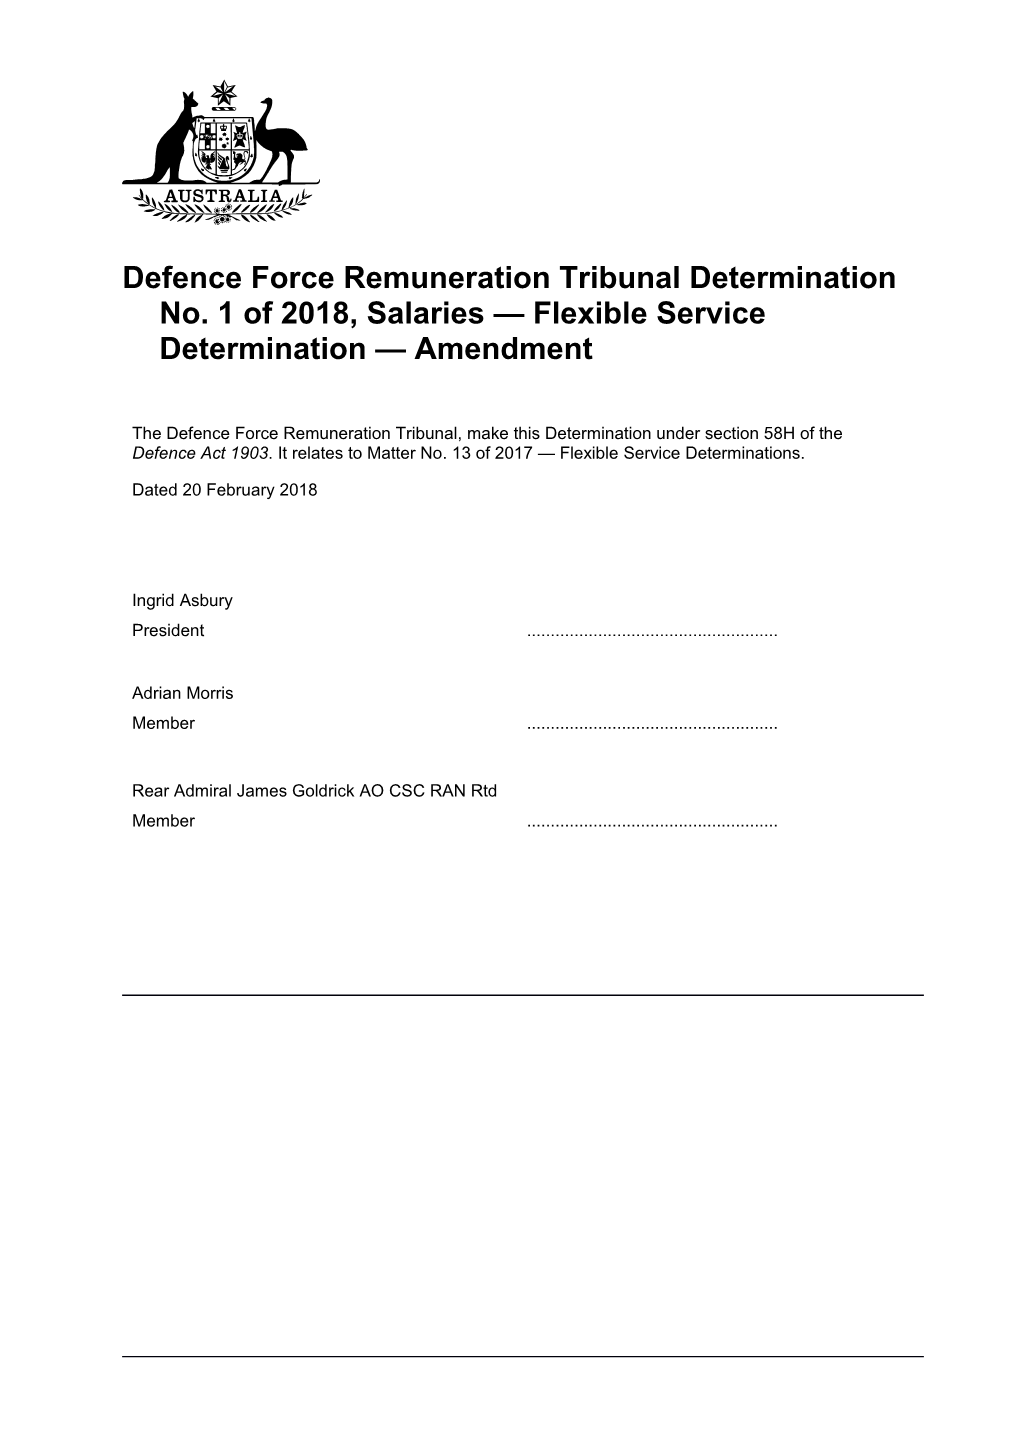 Defence Force Remuneration Tribunal Determination No. 1 of 2018,Salaries Flexible Service